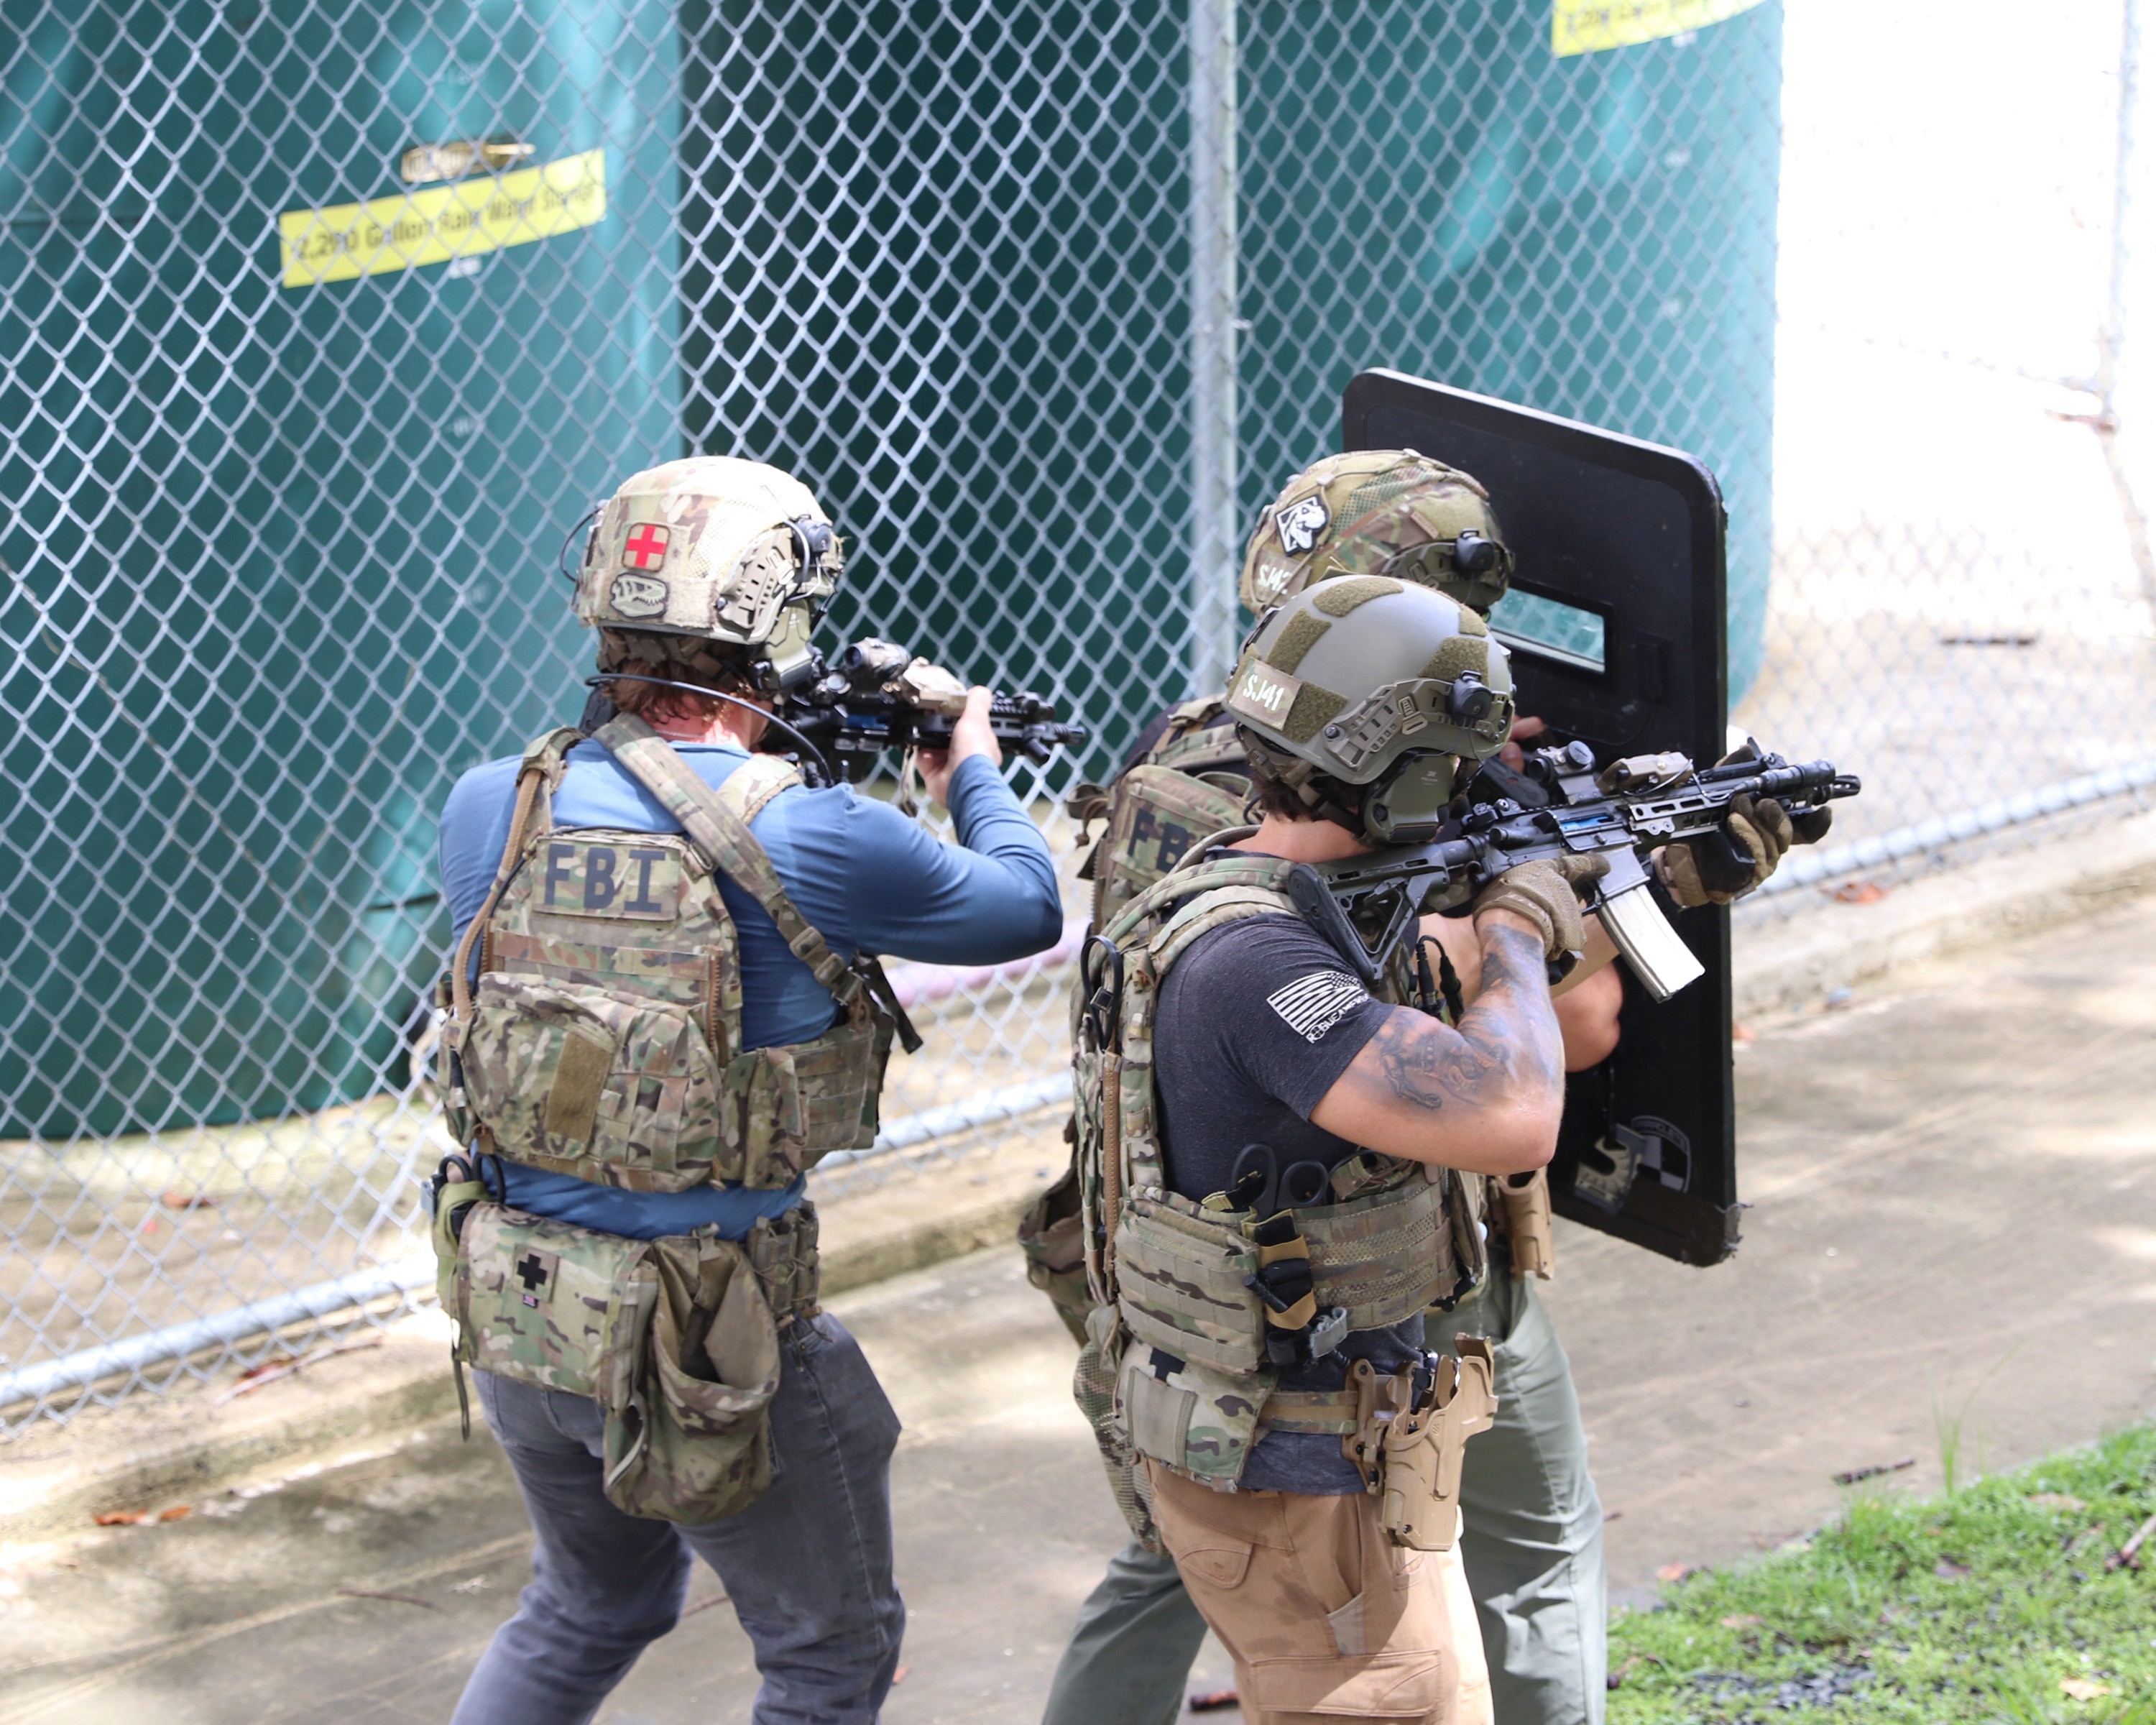 fbi swat in action